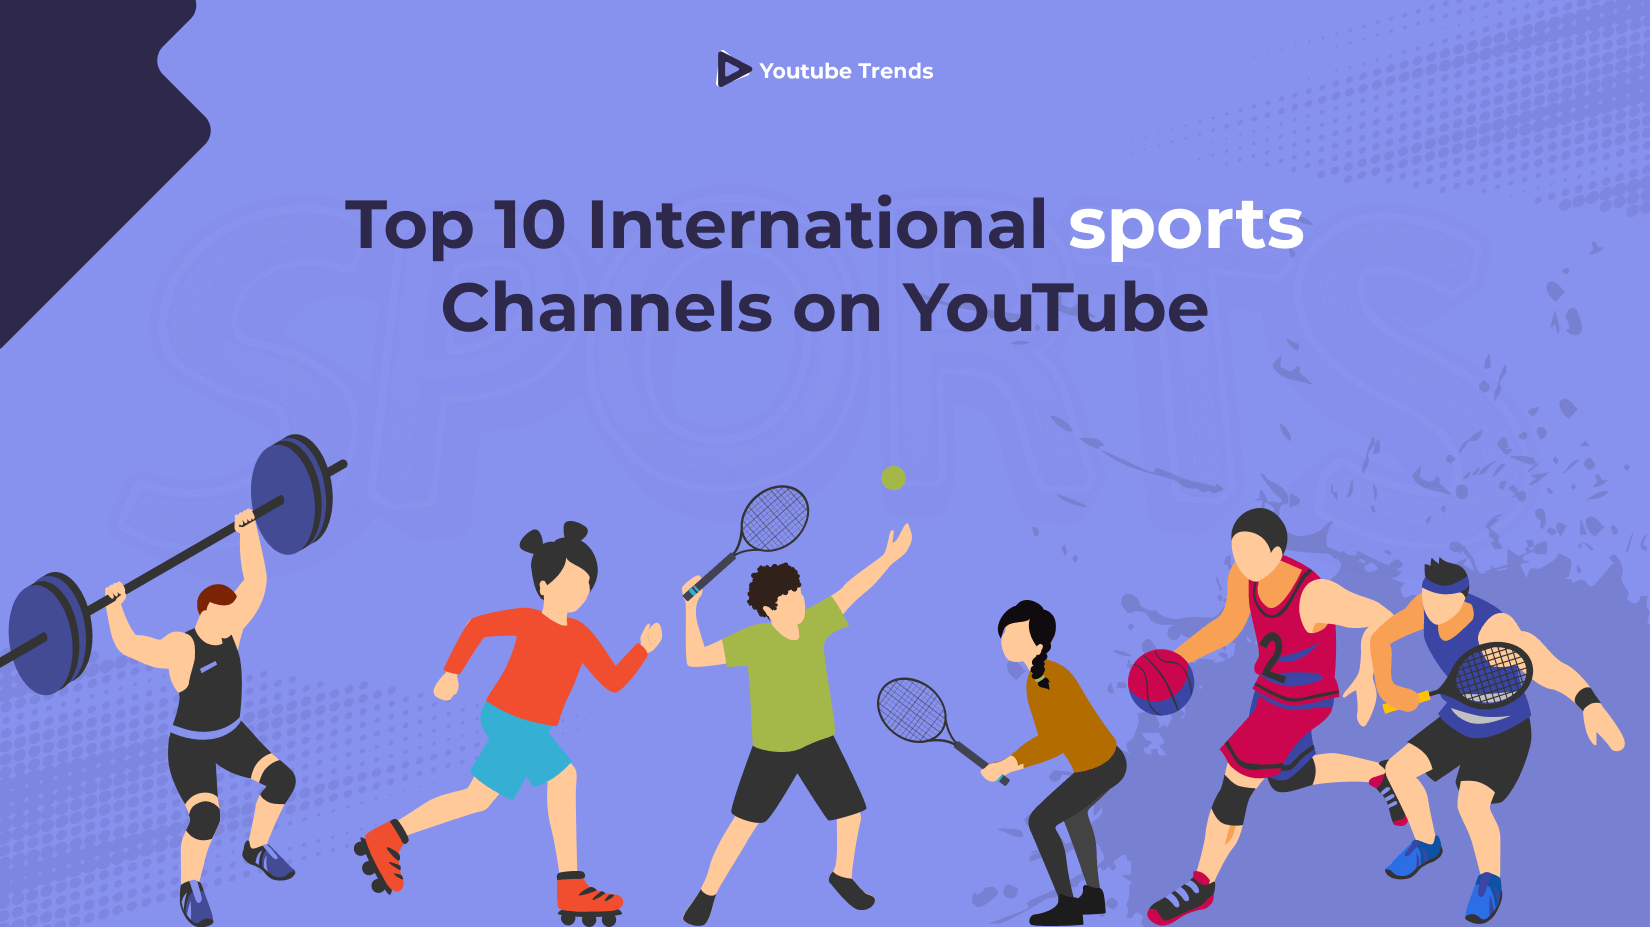 Top 10 International Sports Channels on YouTube